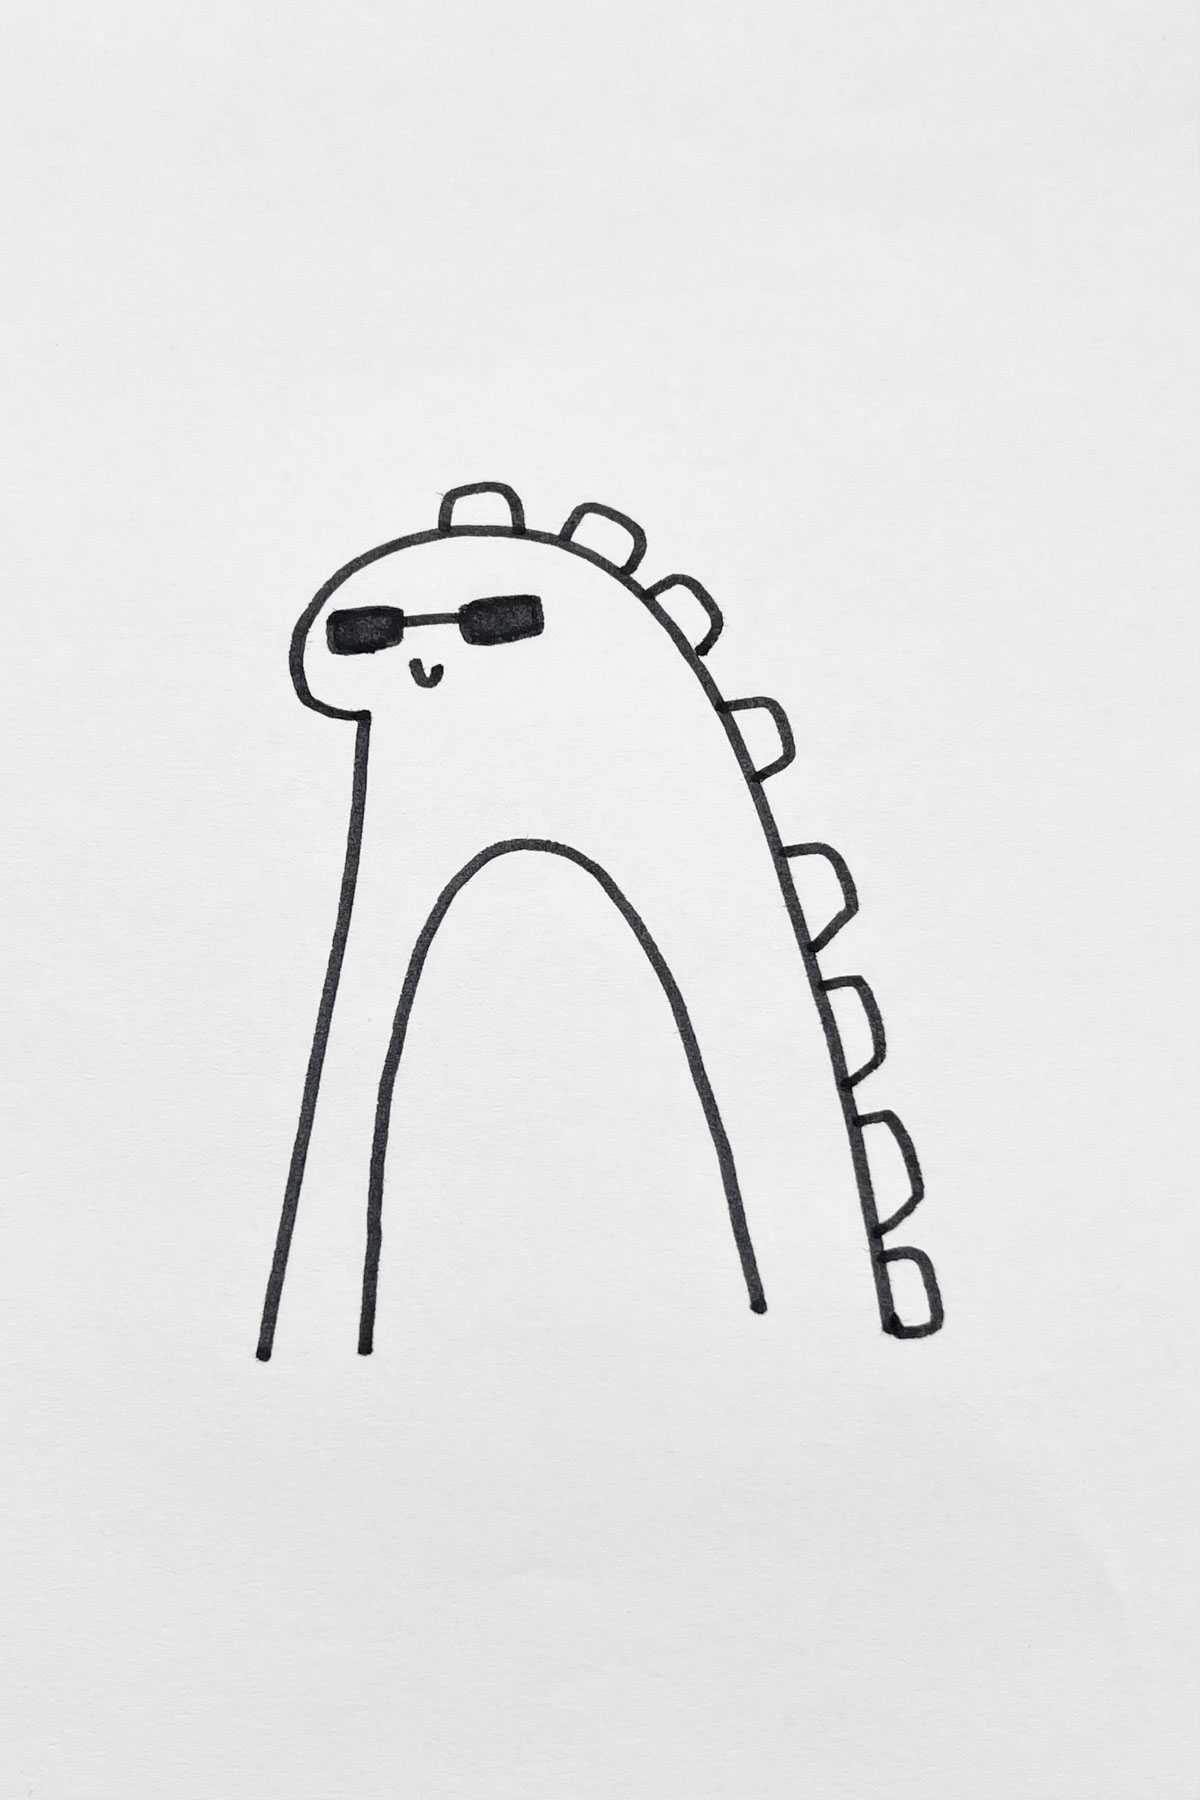 Too Cool Dinosaur drawing